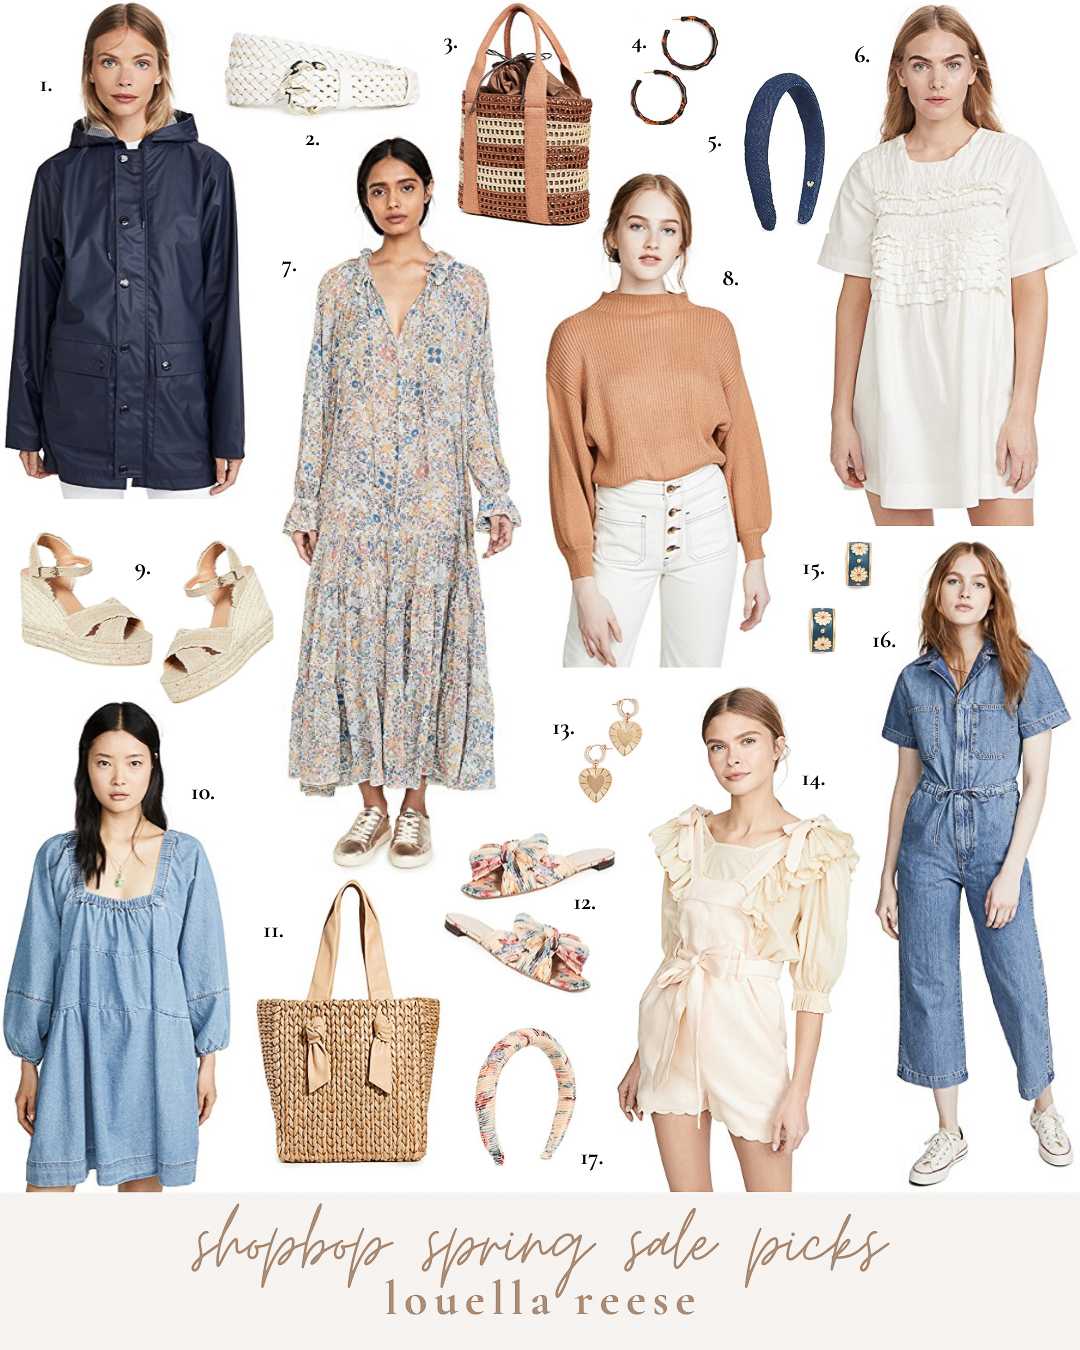 2020 Shopbop Spring Sale Picks | Louella Reese